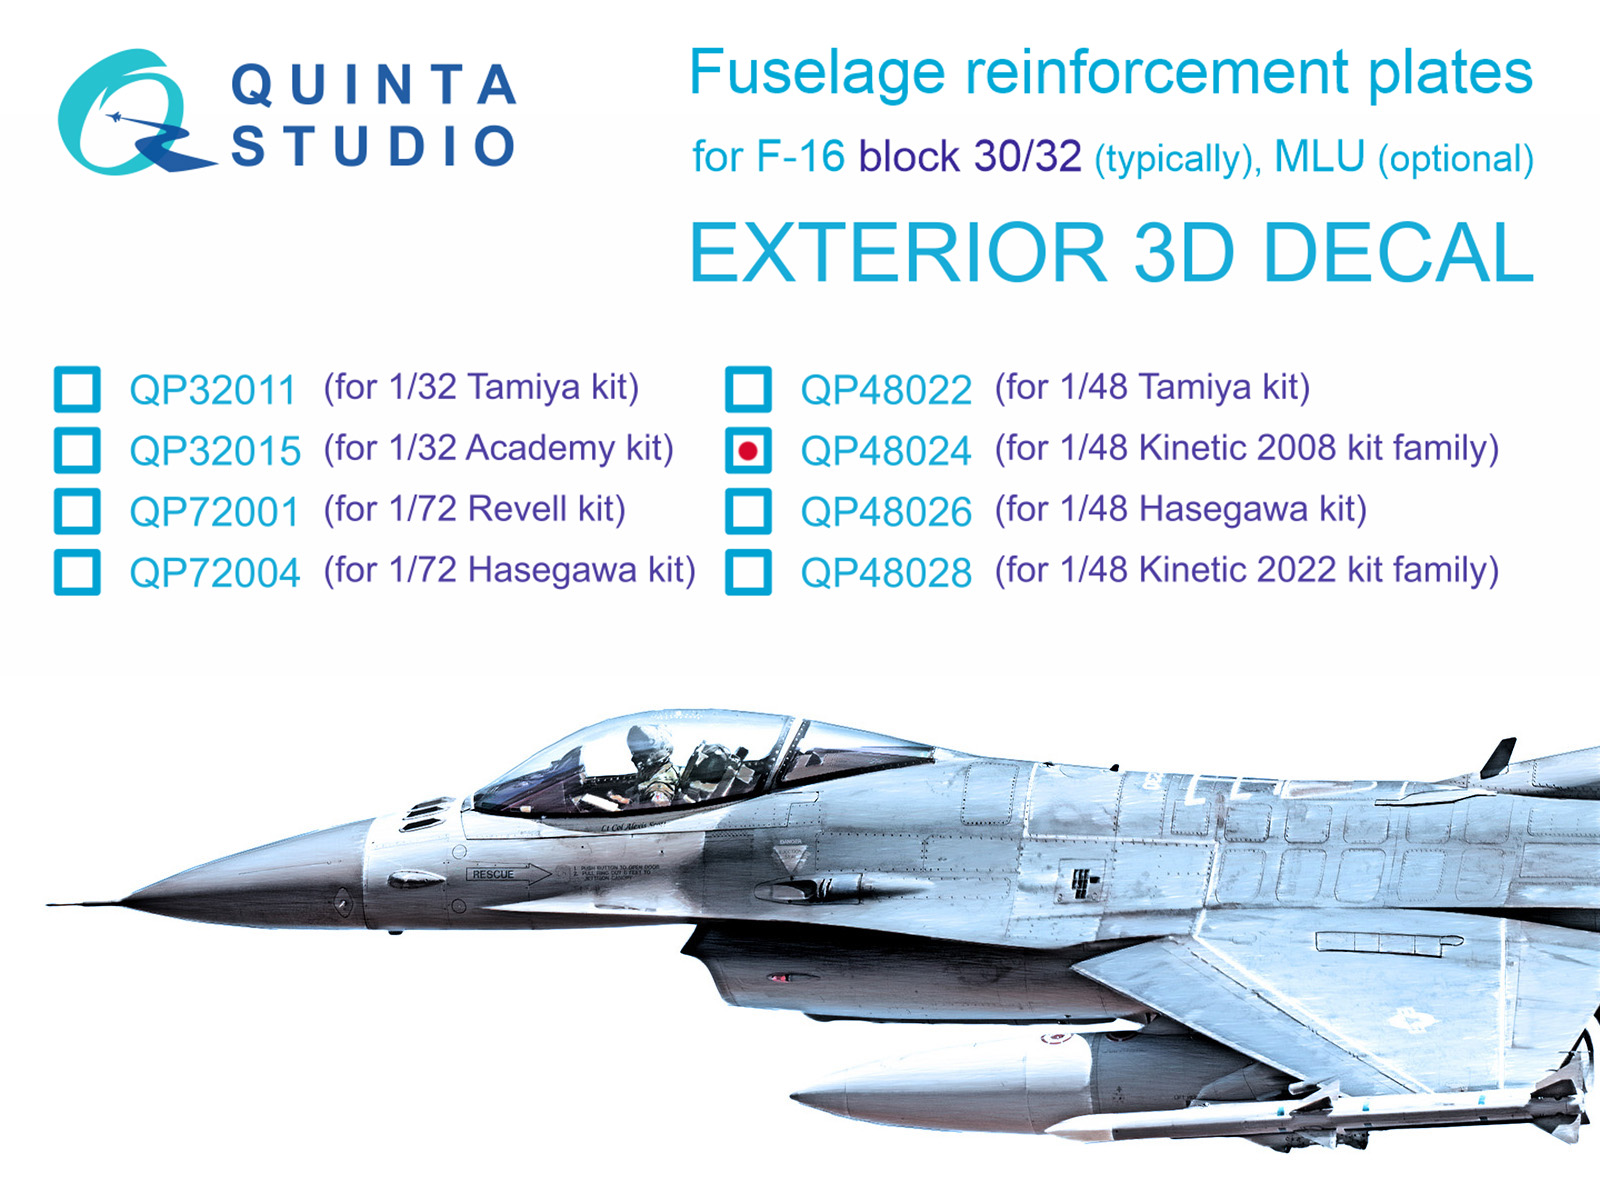 QP48024  декали  Усиливающие накладки для F-16 block 30/32 (Kinetic 2008г. разработки)  (1:48)